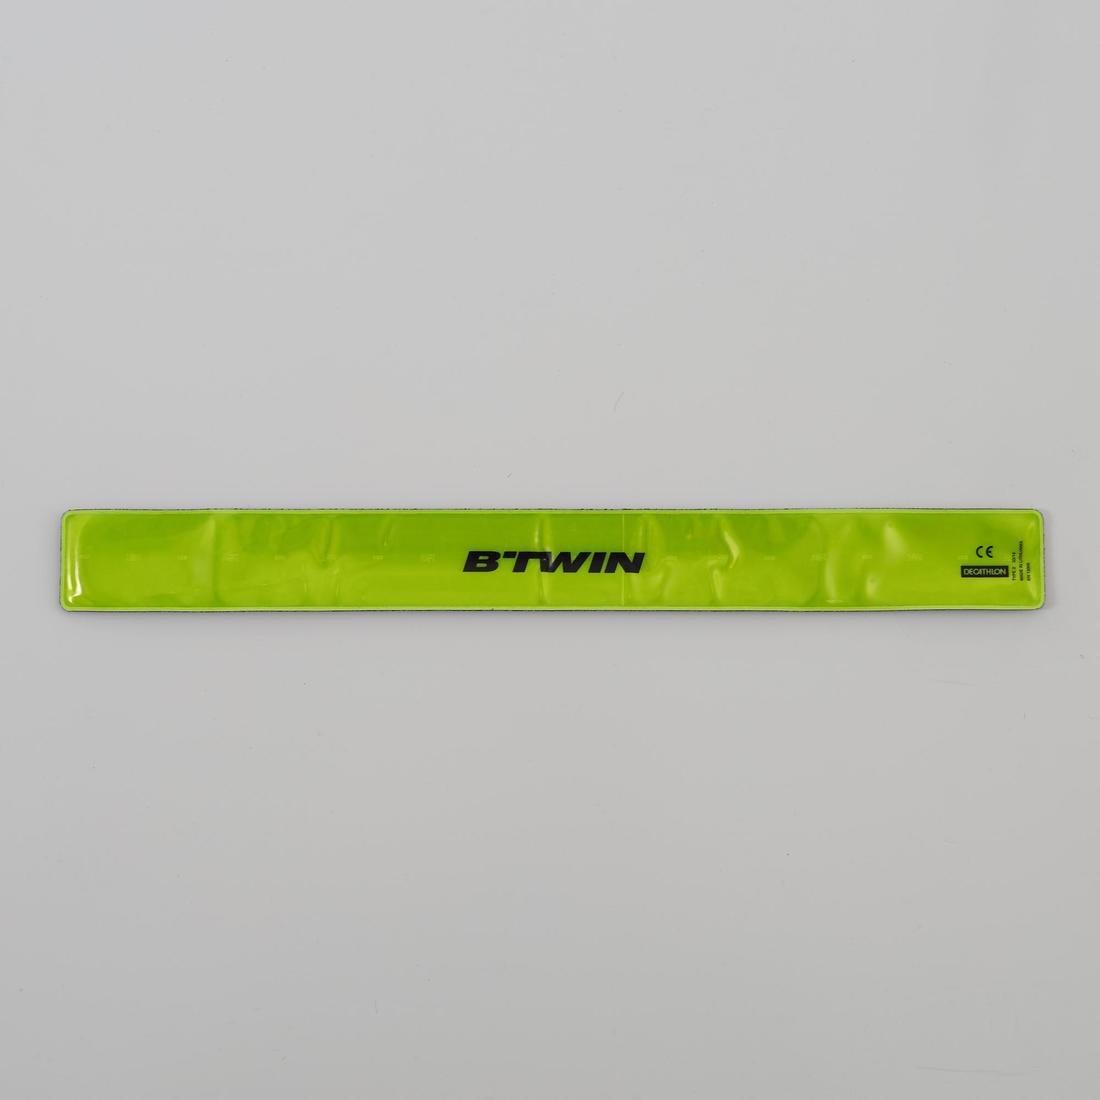 BTWIN - Visibility Armband 540, Yellow